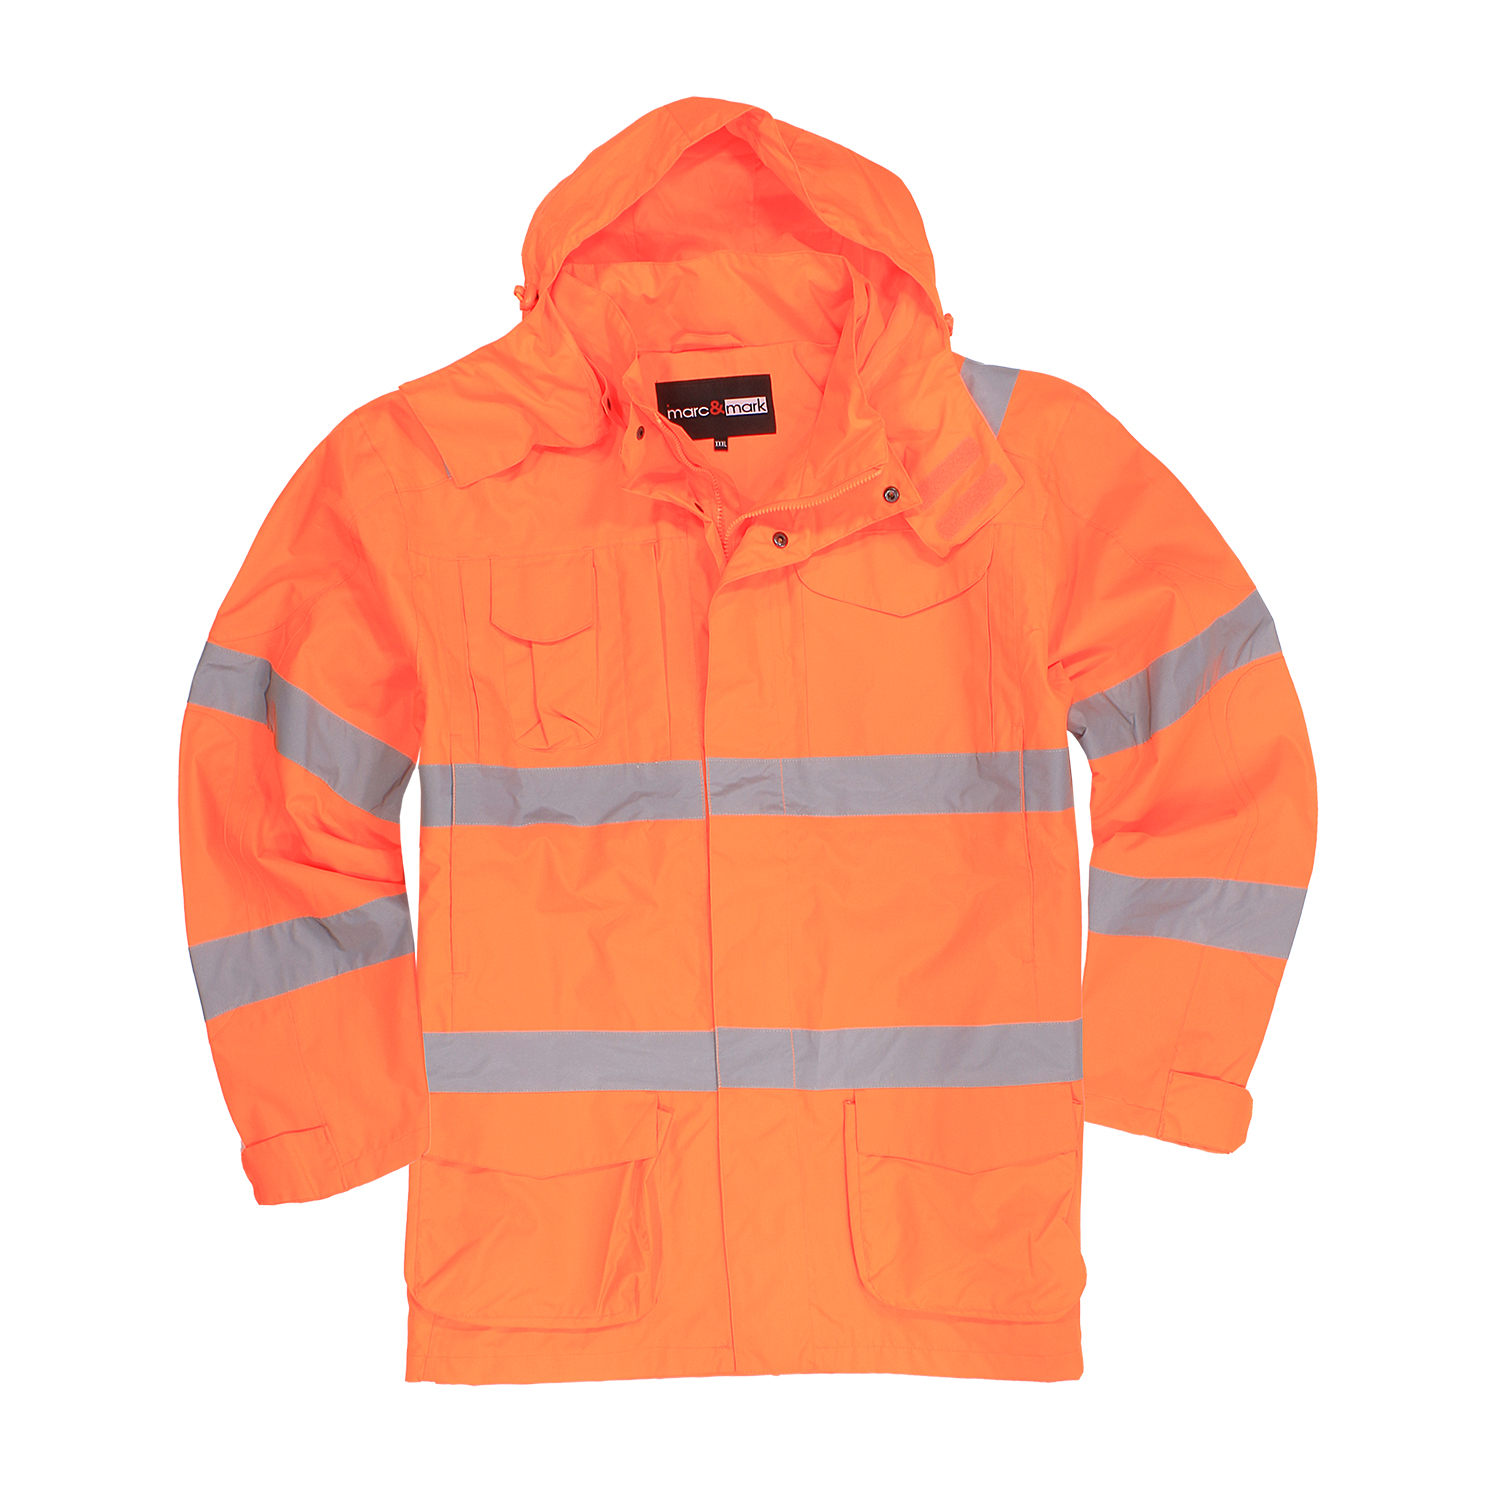 Waterproof warning jacket in orange by marc&mark in oversizes up to 10XL